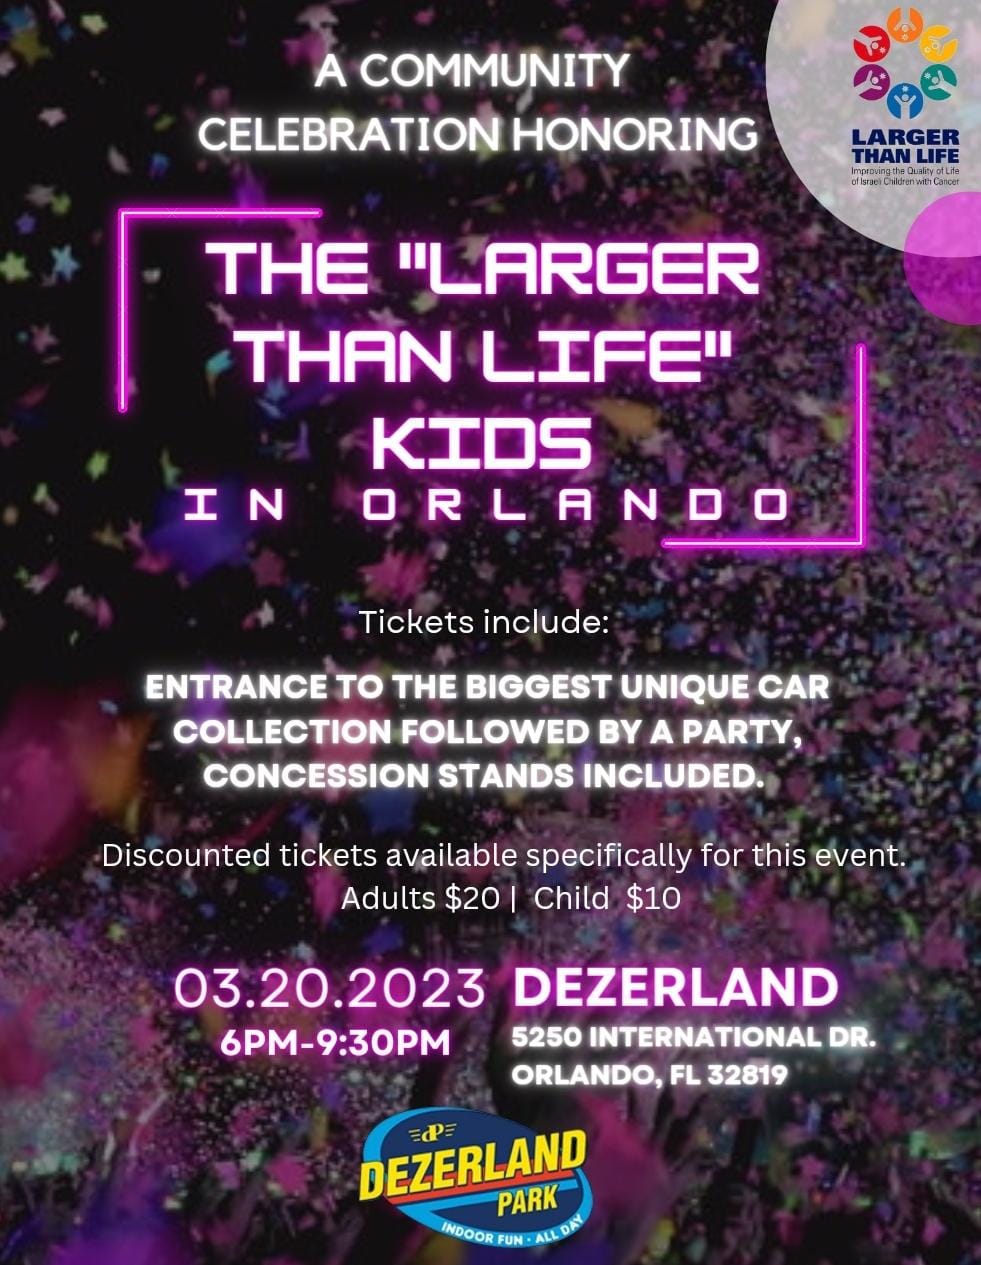 "Larger than Life" at Dezerland Orlando